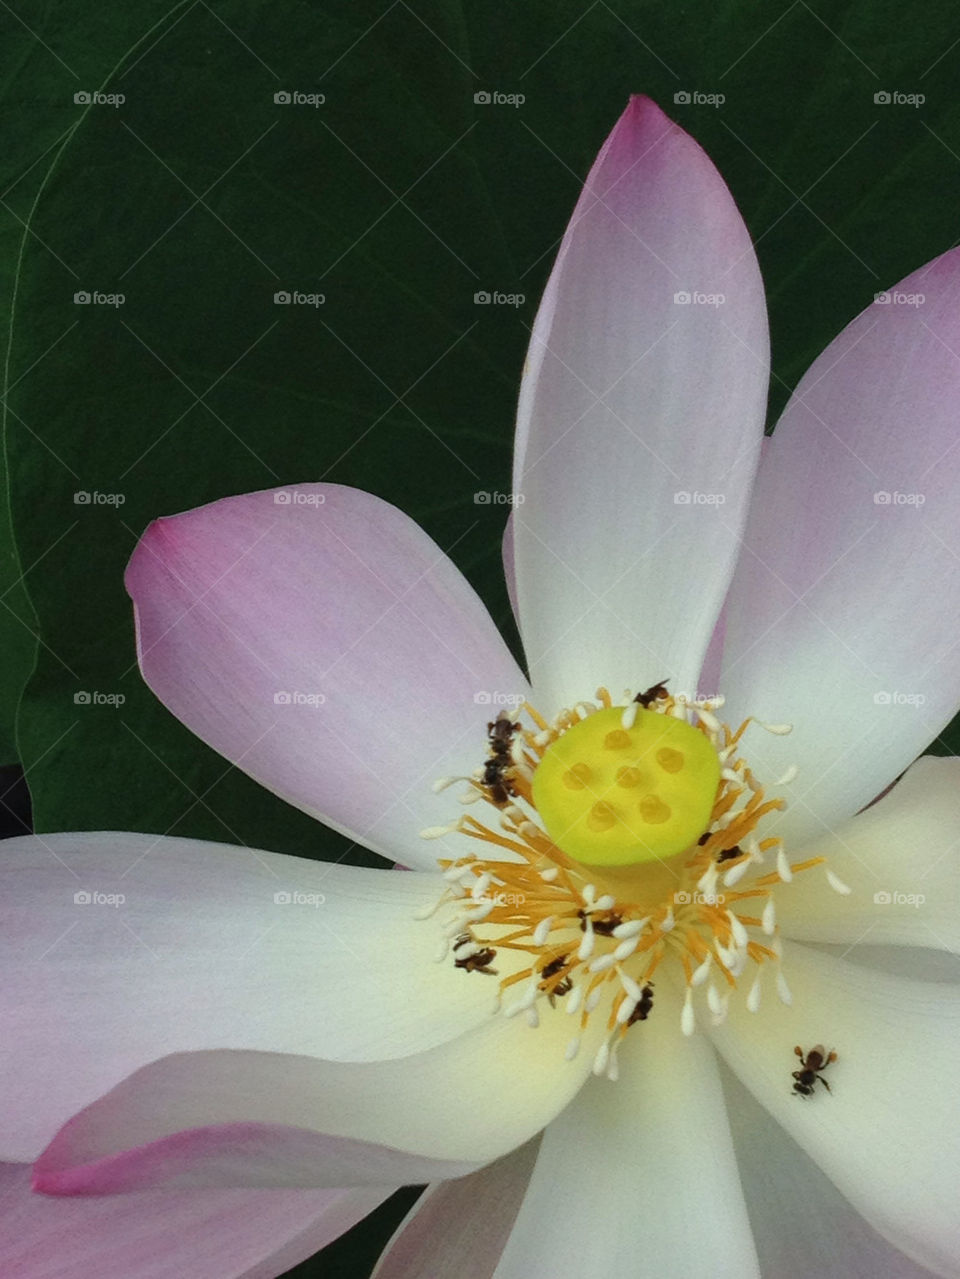 flower lotus waterlilly by ptheerak